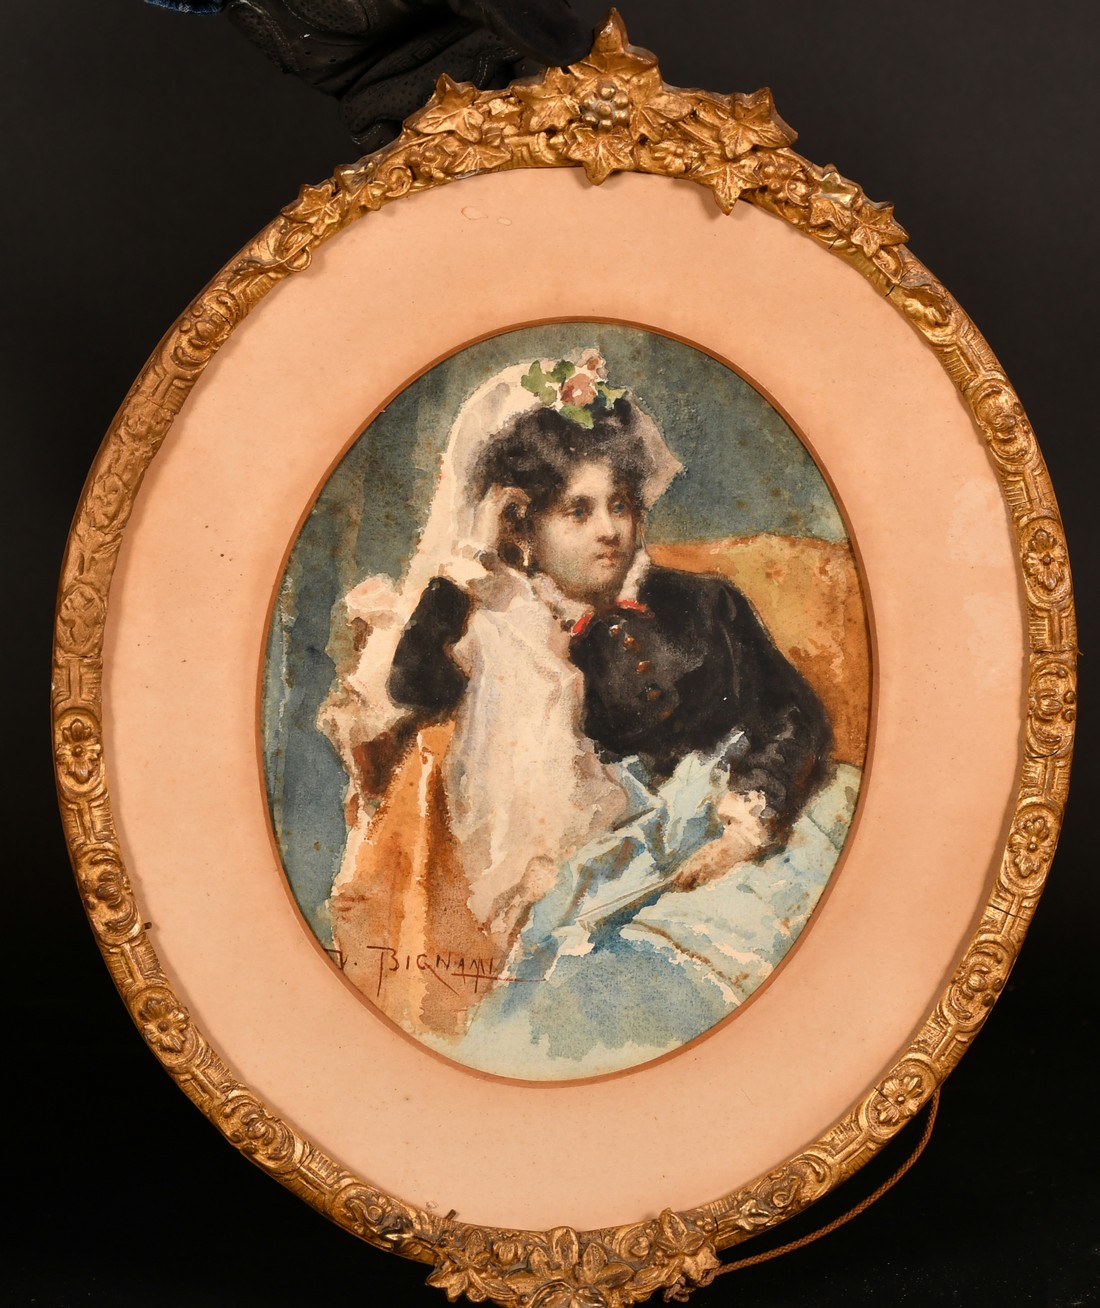 D. Bignami, Late 19th Century Italian School, a portrait of a seated female figure holding a fan, - Image 2 of 4